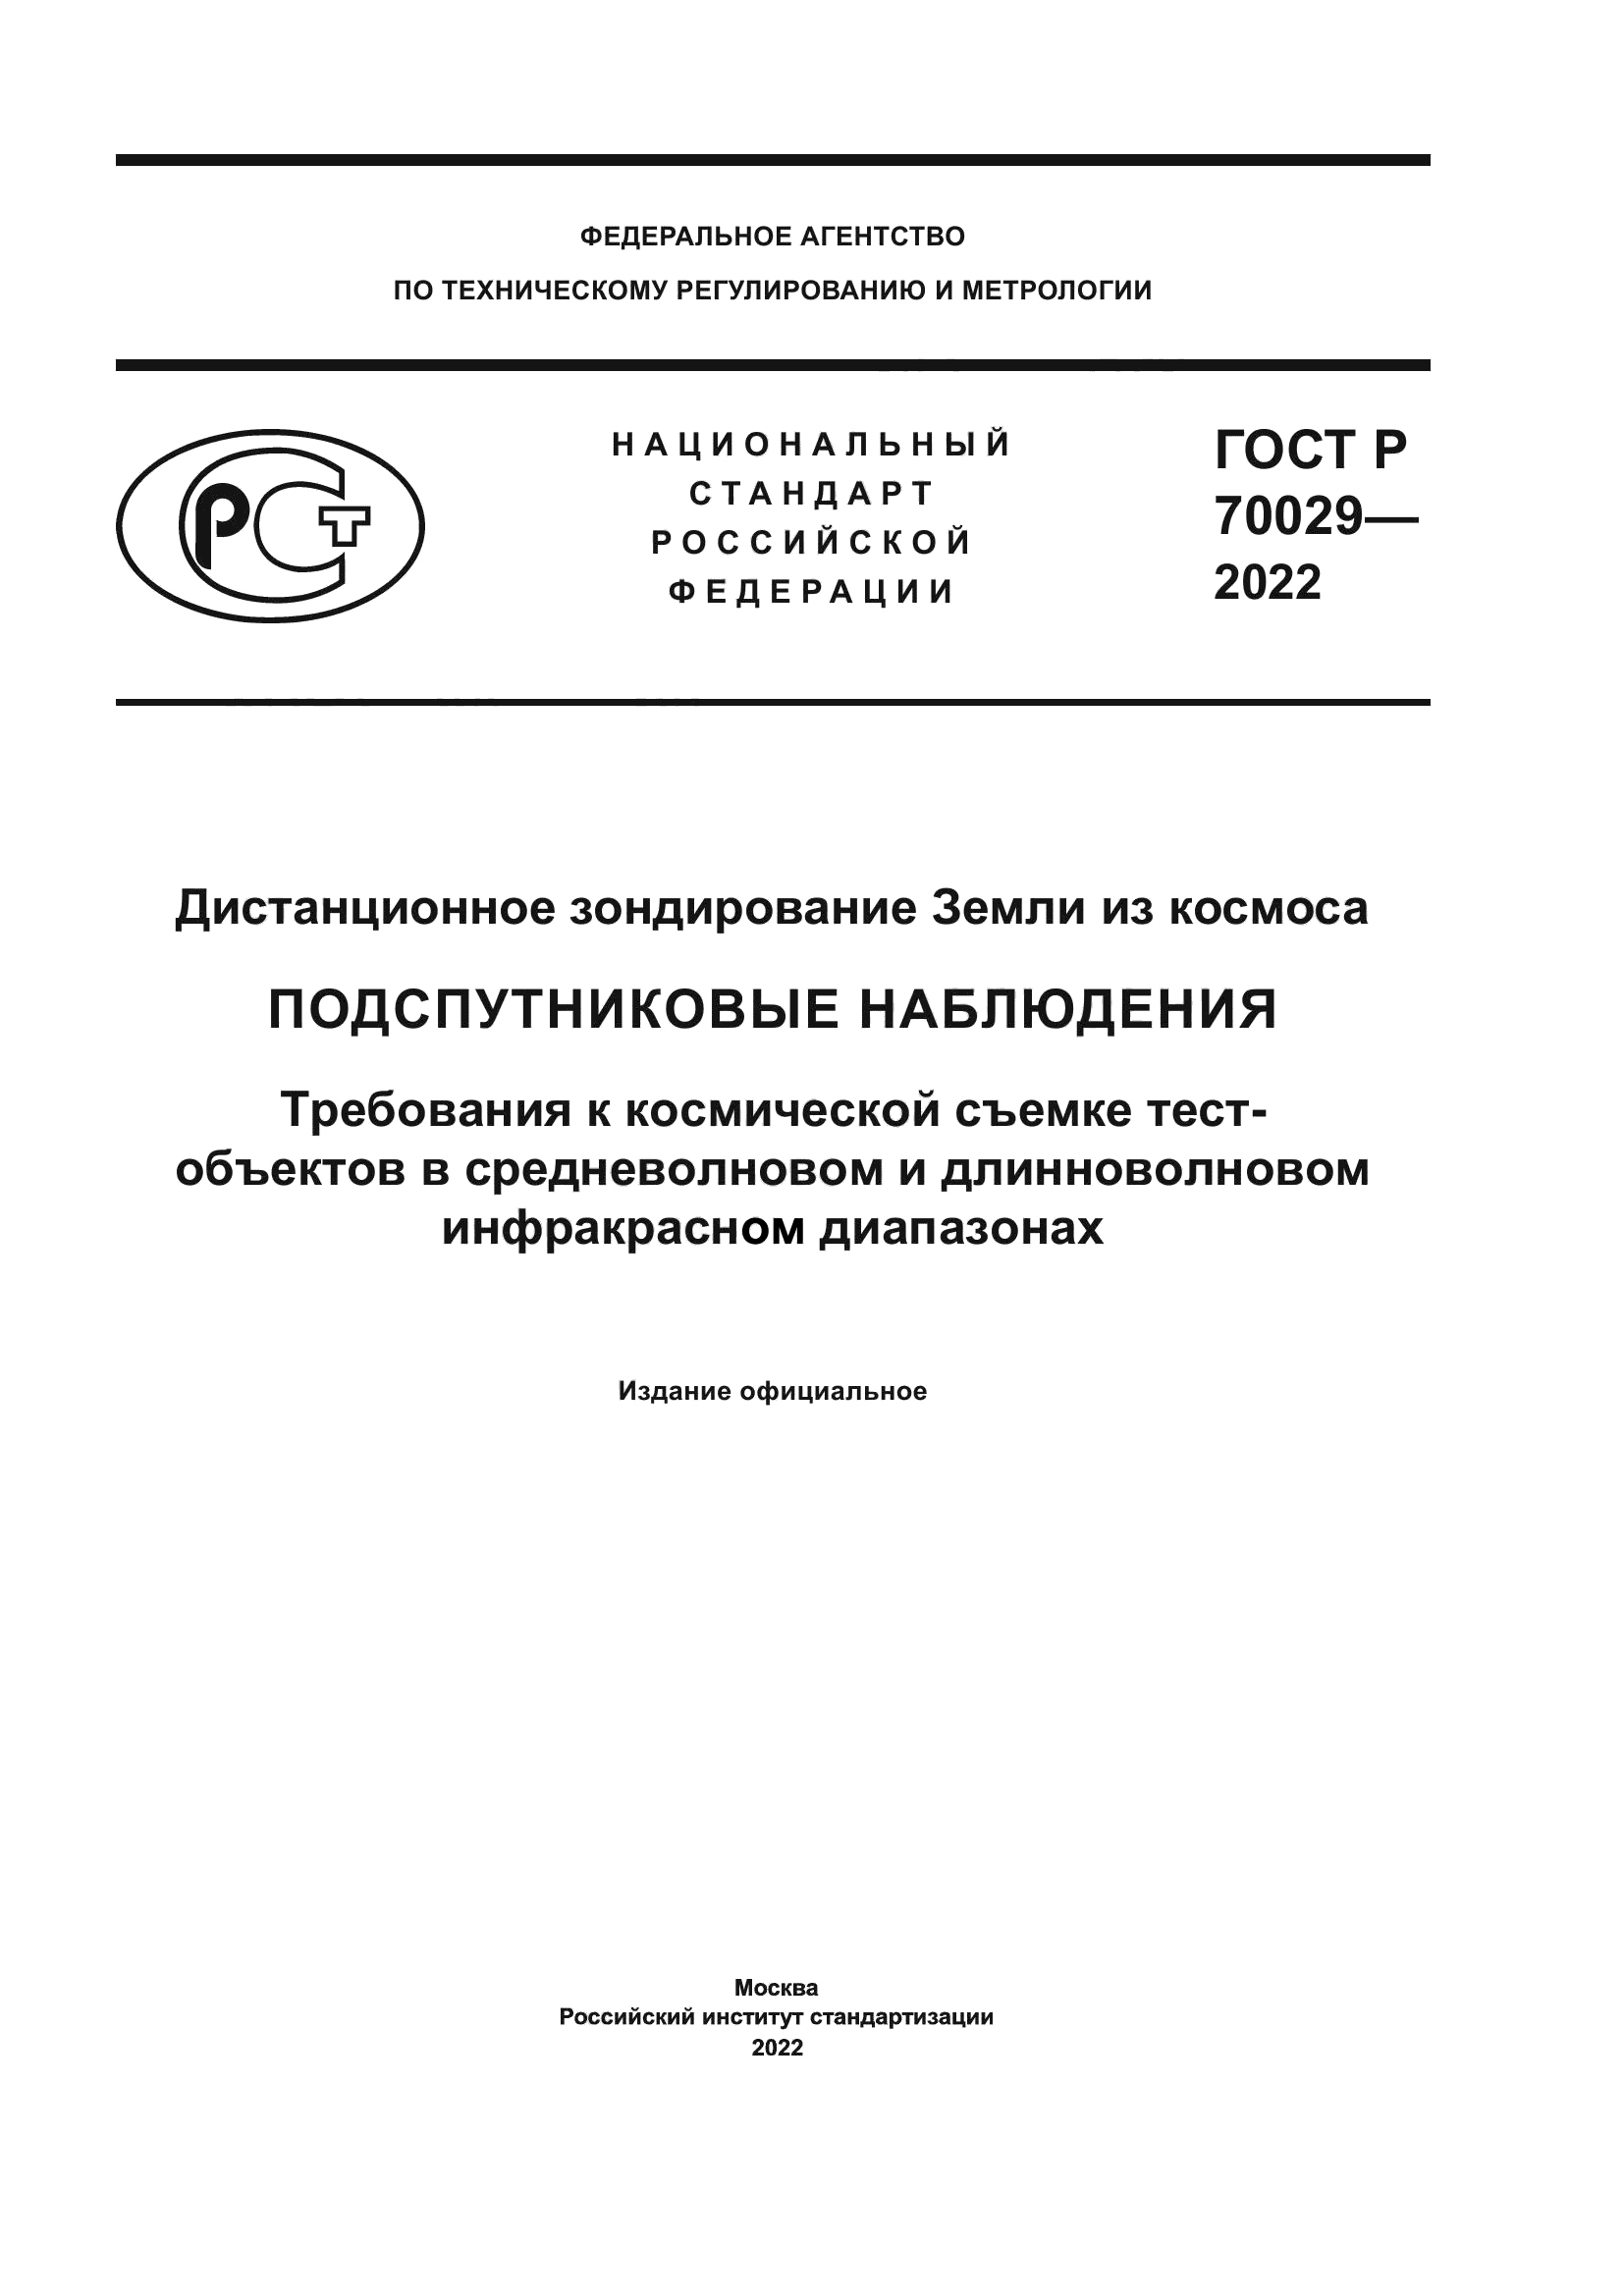 ГОСТ Р 70029-2022